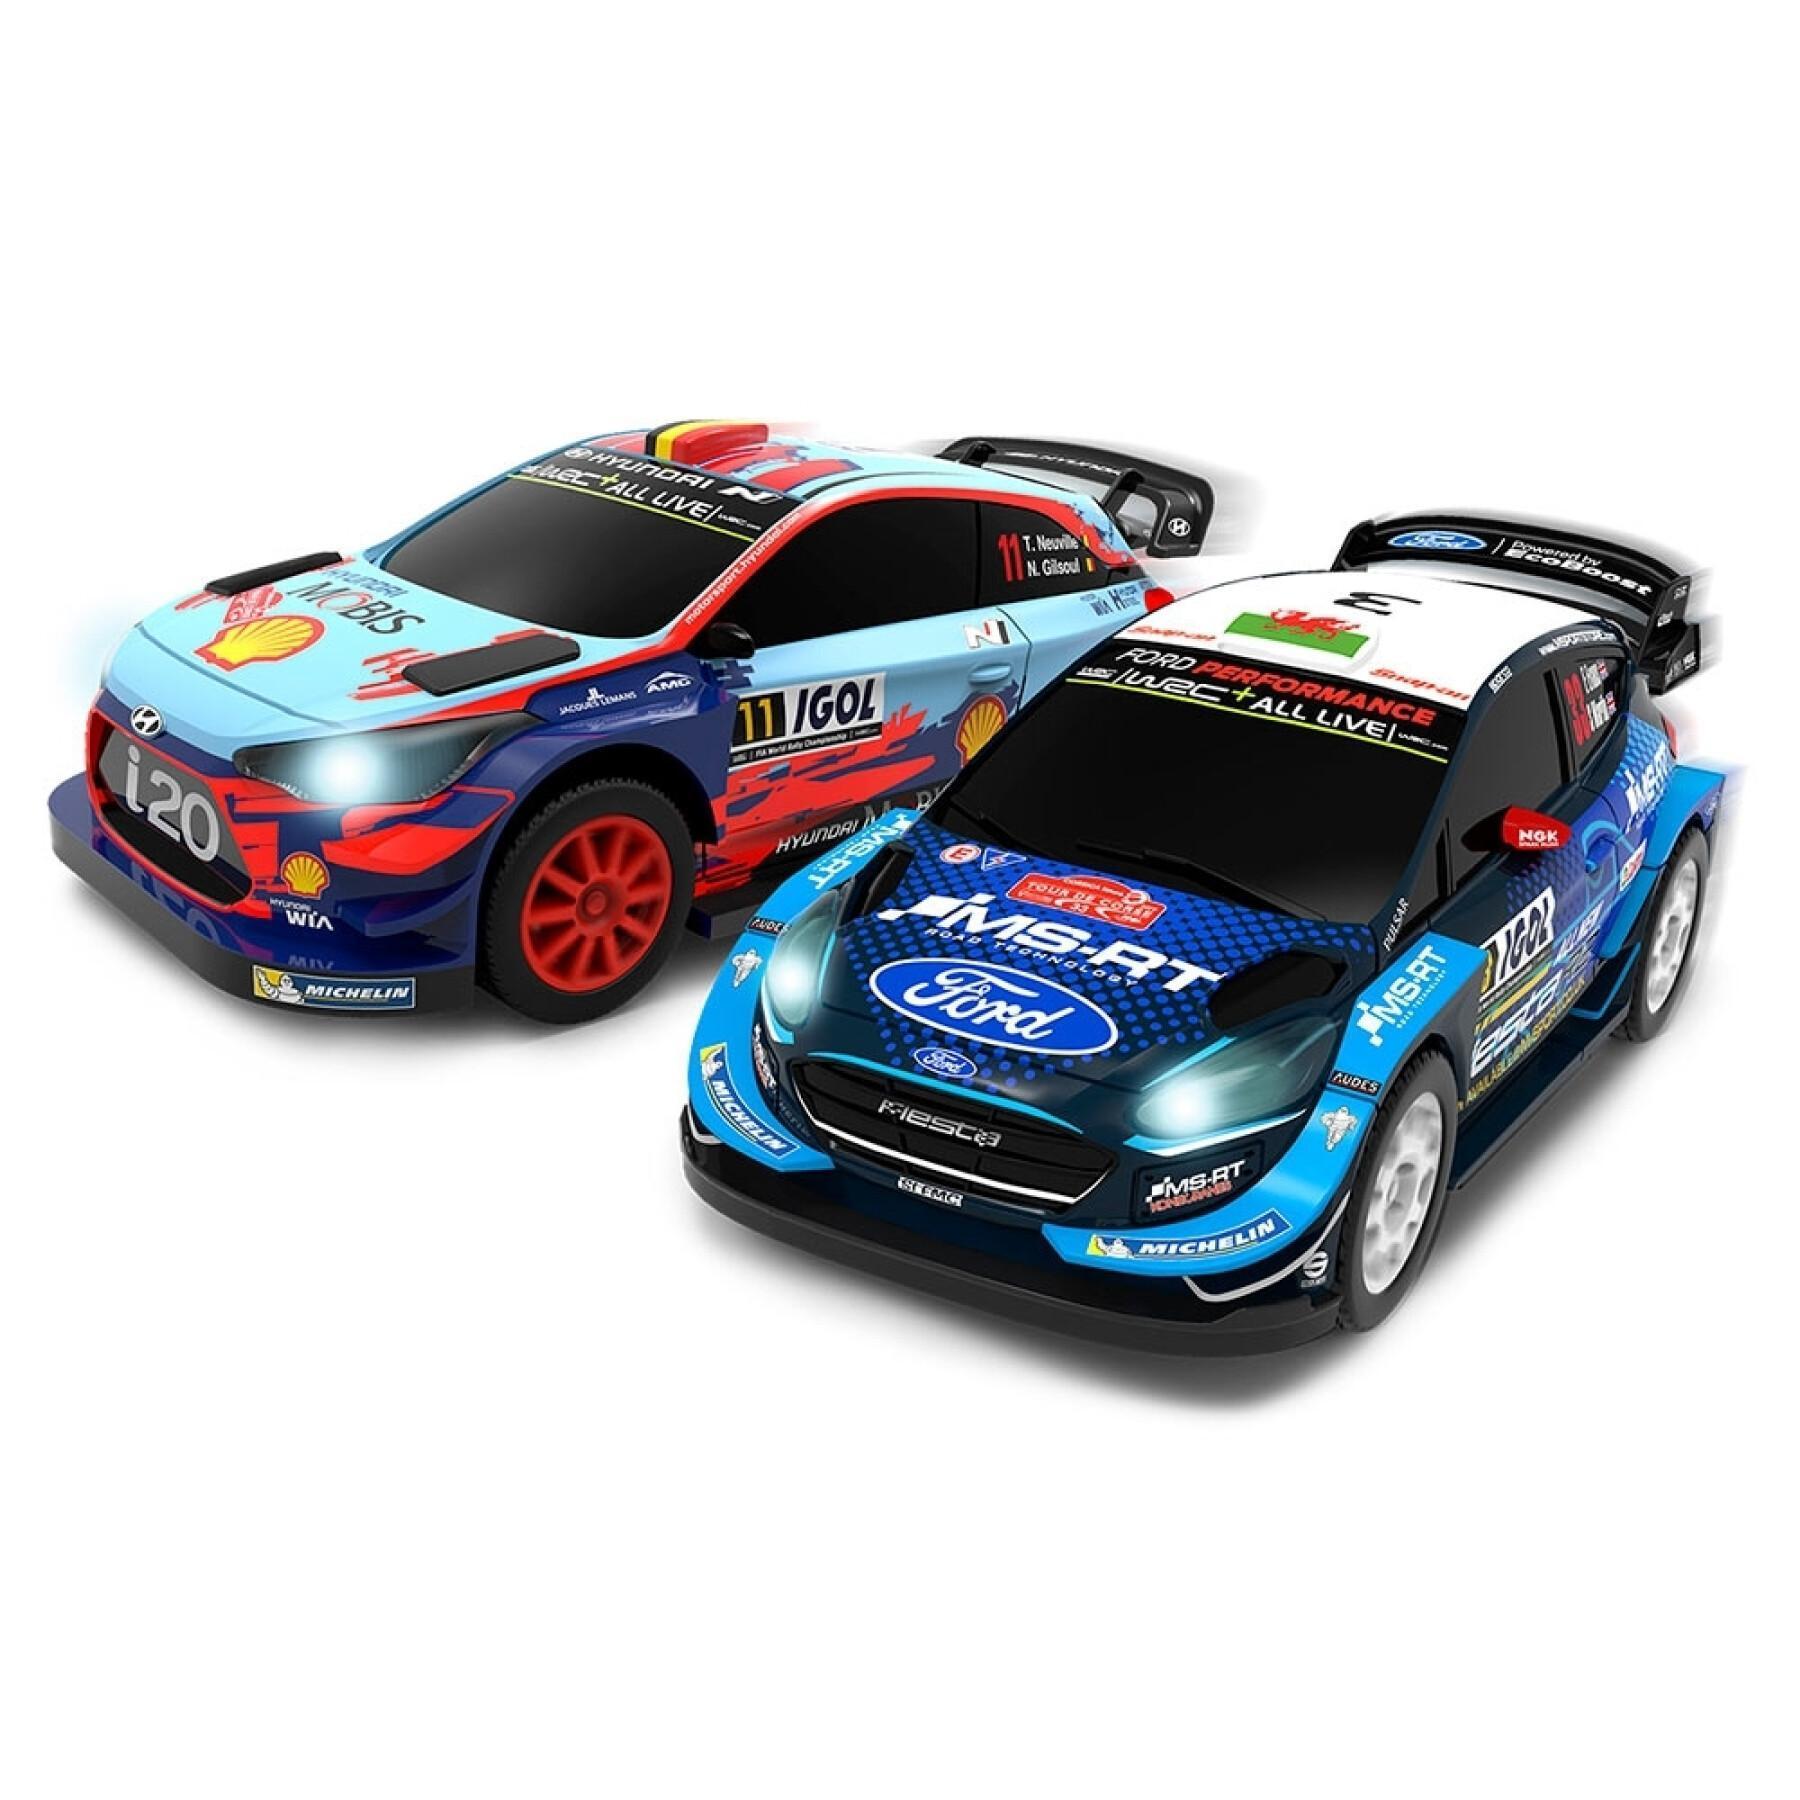 Circuito Generico slot car Ninco WRC Rallye Corsica